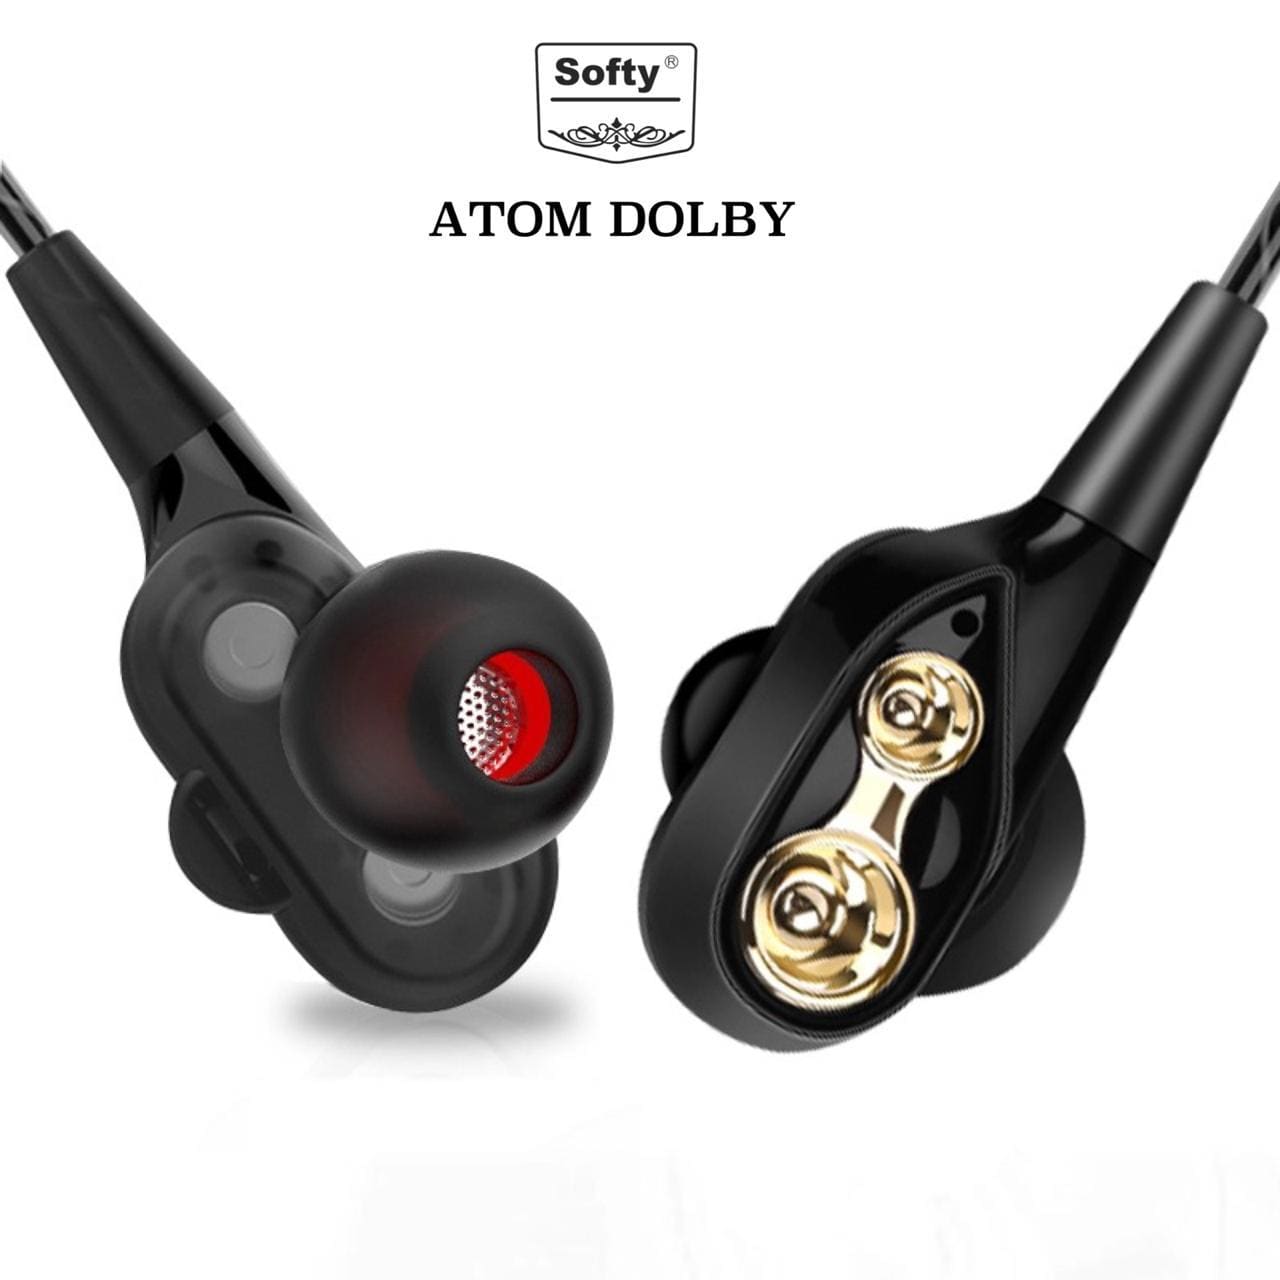 Softy premium quality EARPHONE WITH MIC Atom Dolby S8-EARPHONES-dealsplant